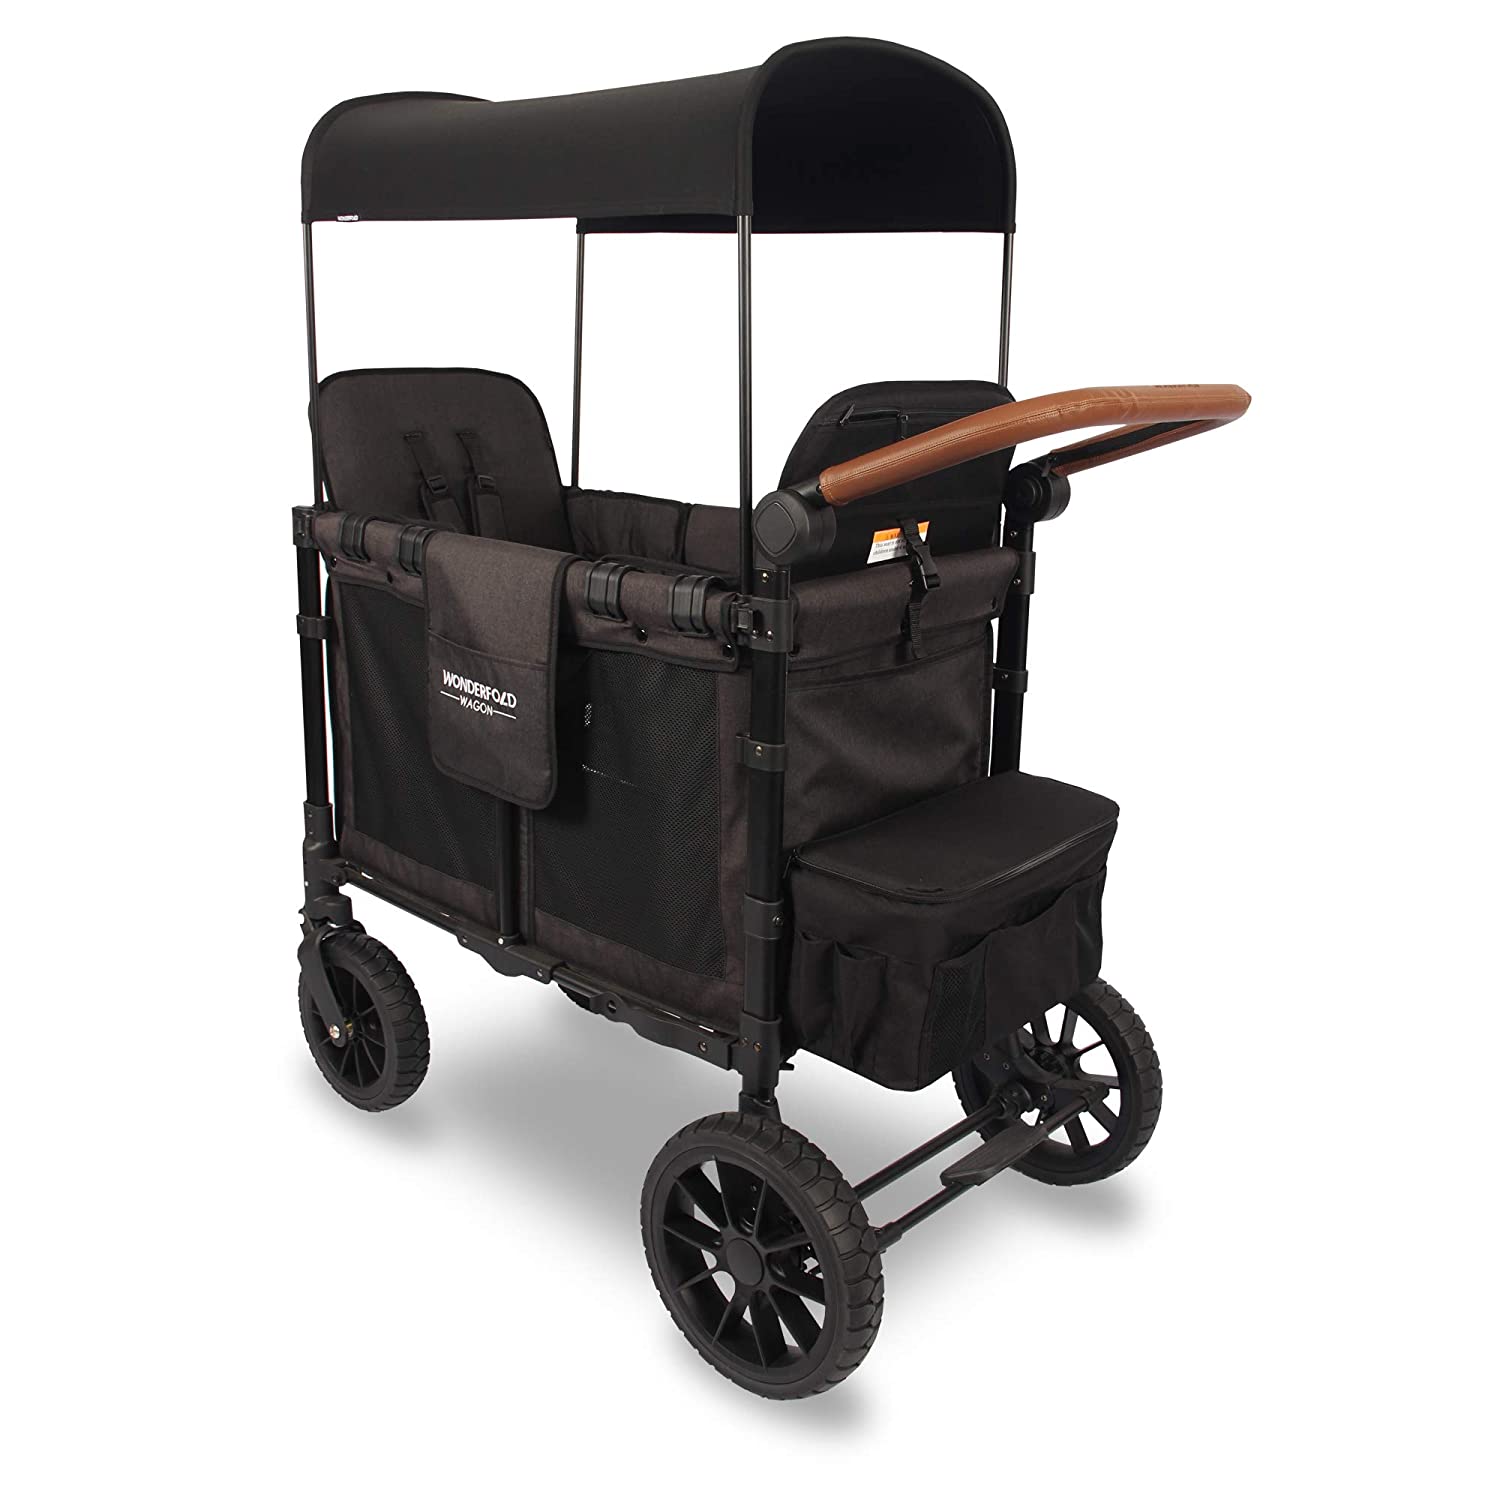 WonderFold W2 Luxe Push/Pull 2-Passenger Stroller Wagon Black New